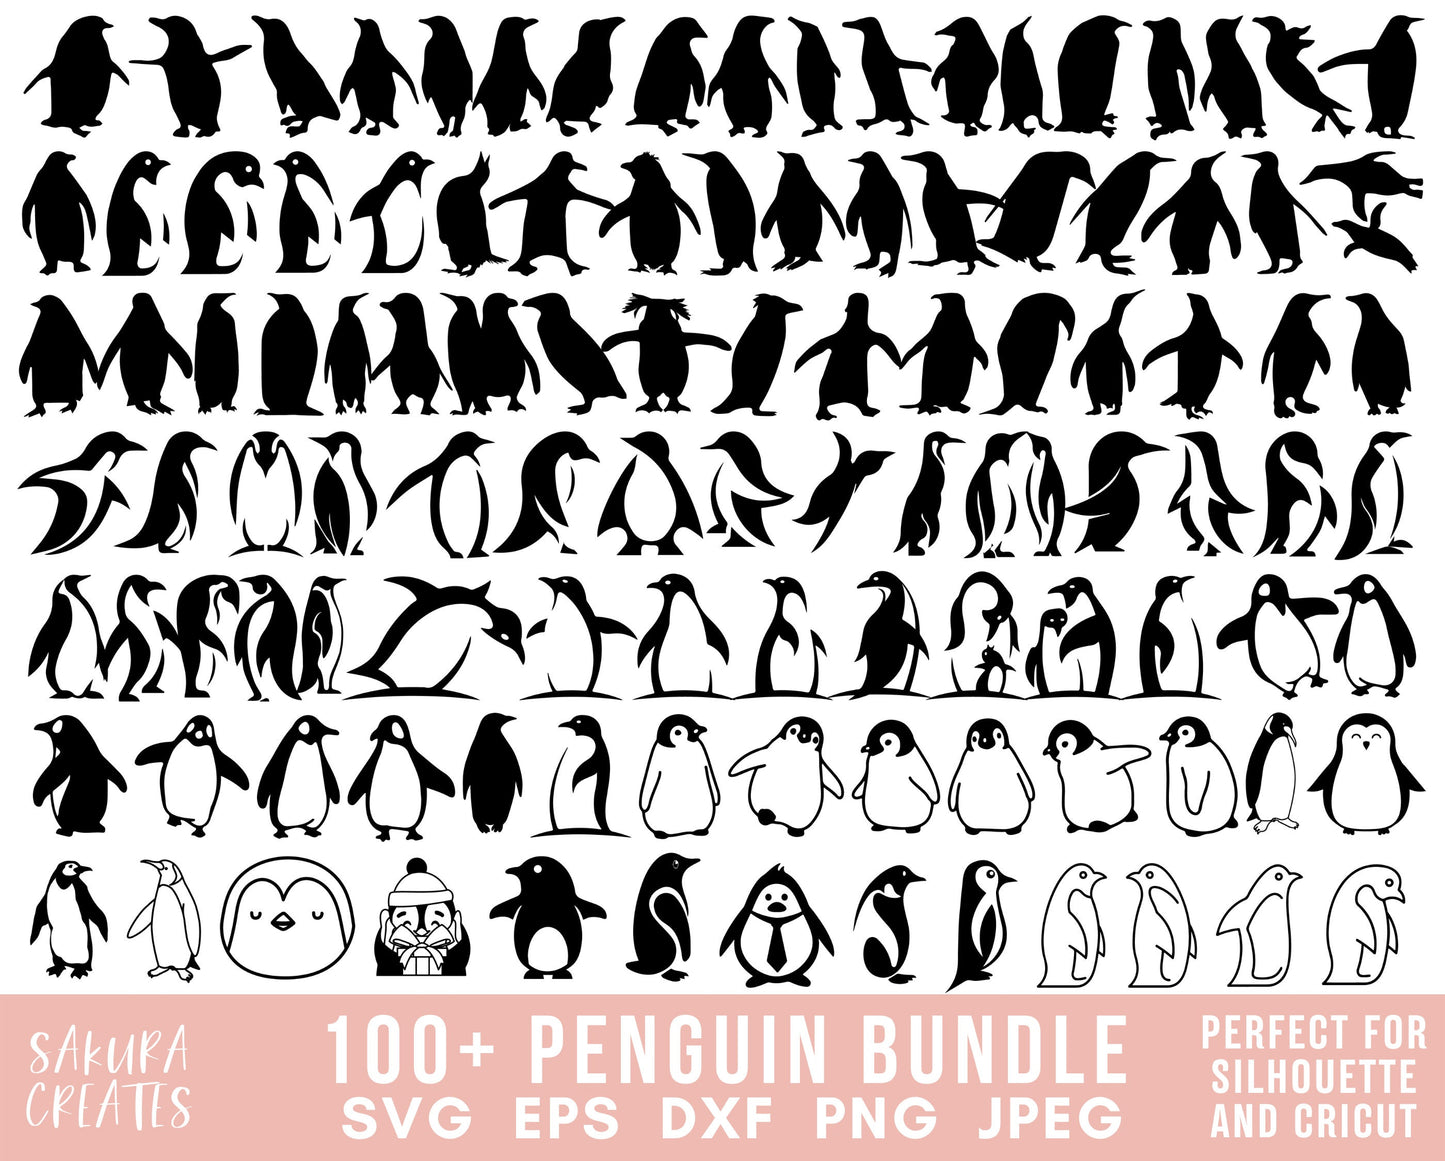 100+ Penguin SVG Penguin SVG Bundle Penguin Clipart Penguin Silhouette Penguin Vector Penguin Cut file Animal svg files for cricut silhouett